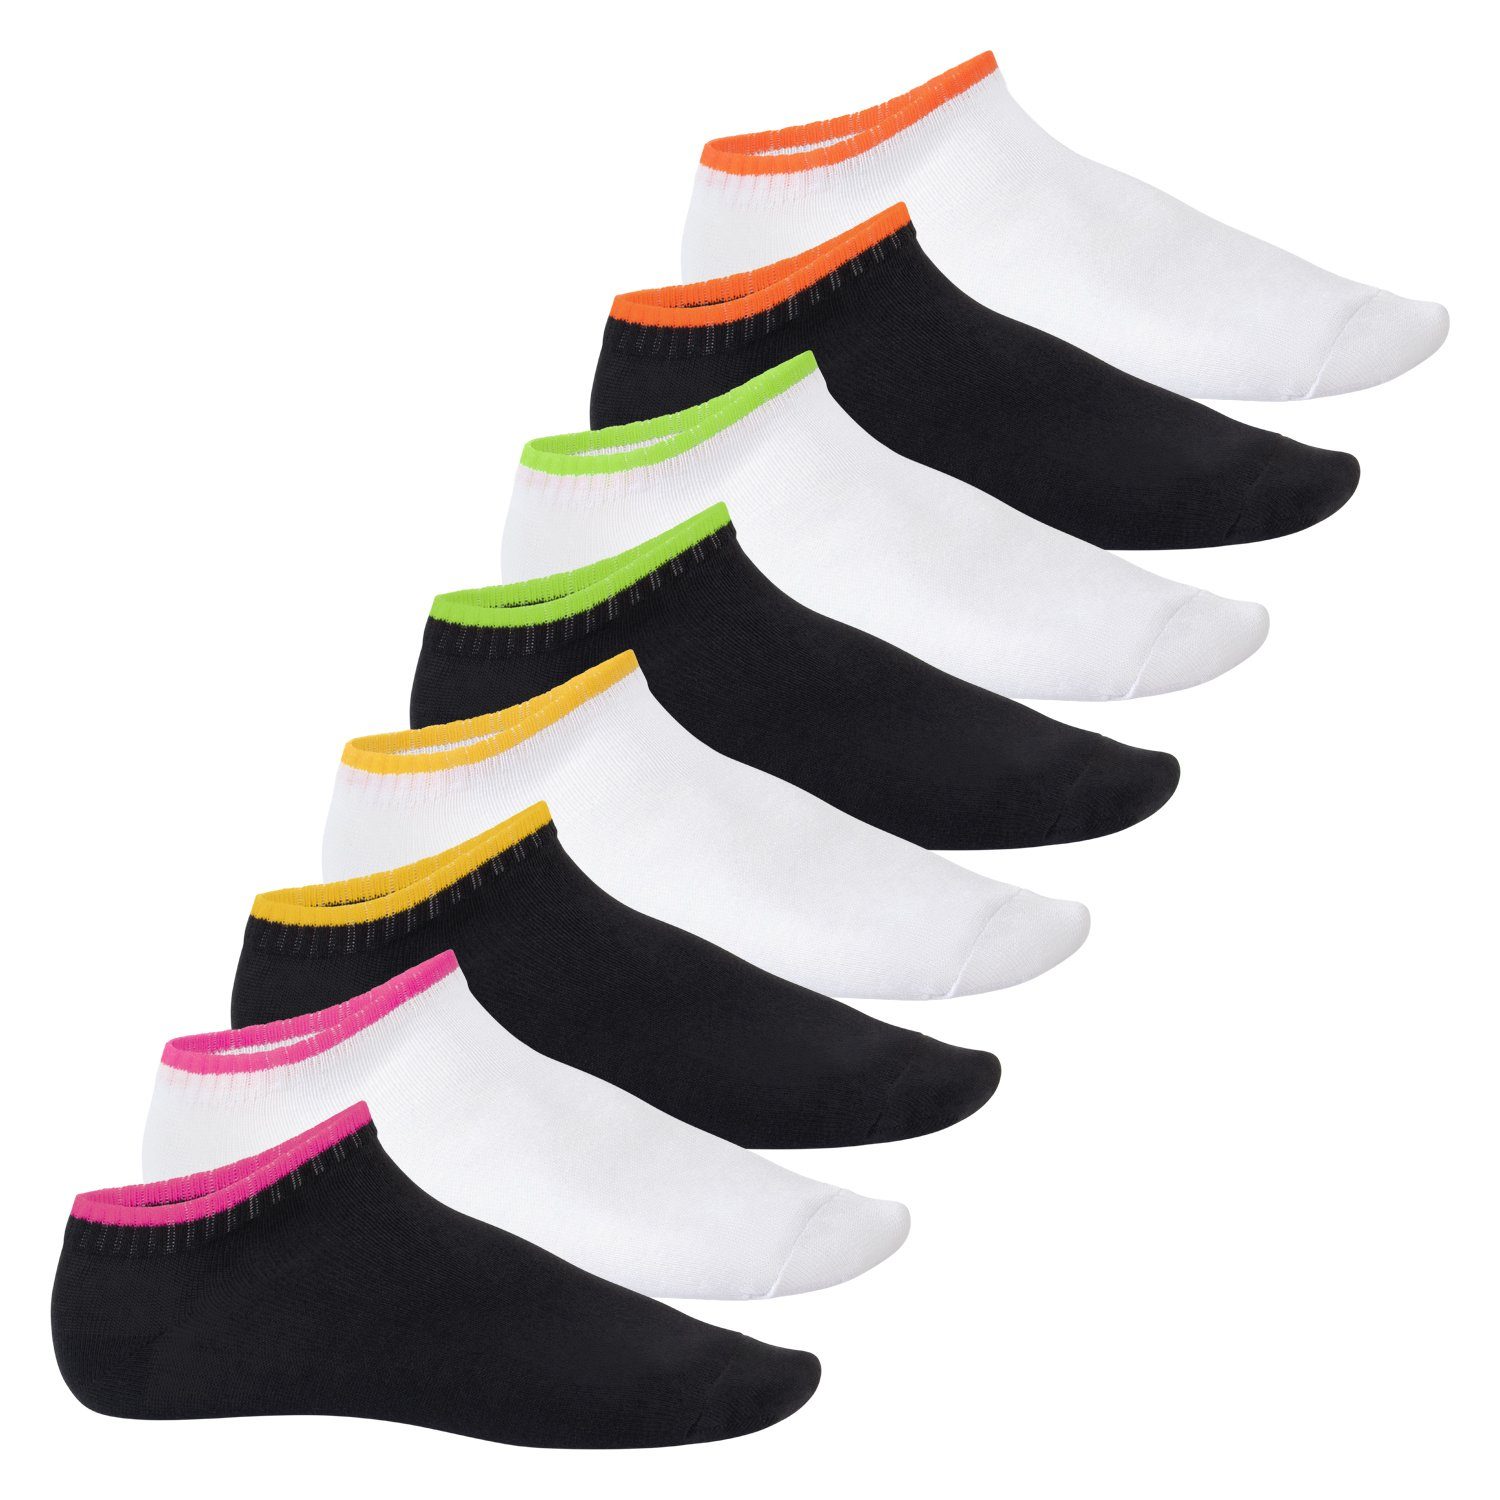 Footstar Füßlinge Damen & Herren Sneaker Socken (8 Paar), Neon Sportsocken Neon Flash - Mix